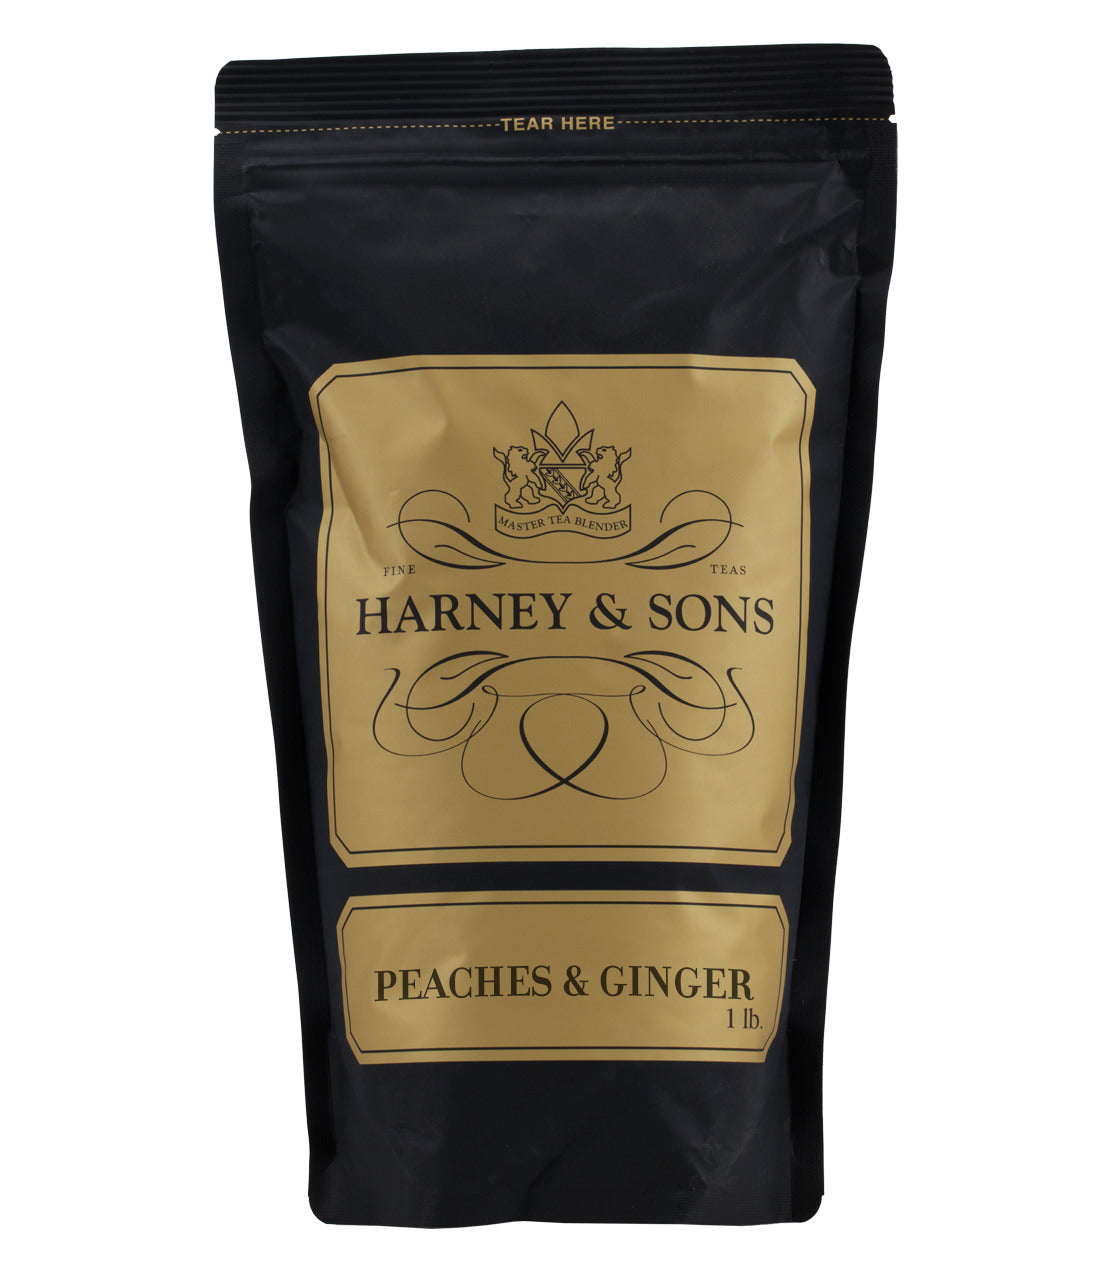 Peaches & Ginger - Loose 1 lb. Bag - Harney & Sons Fine Teas